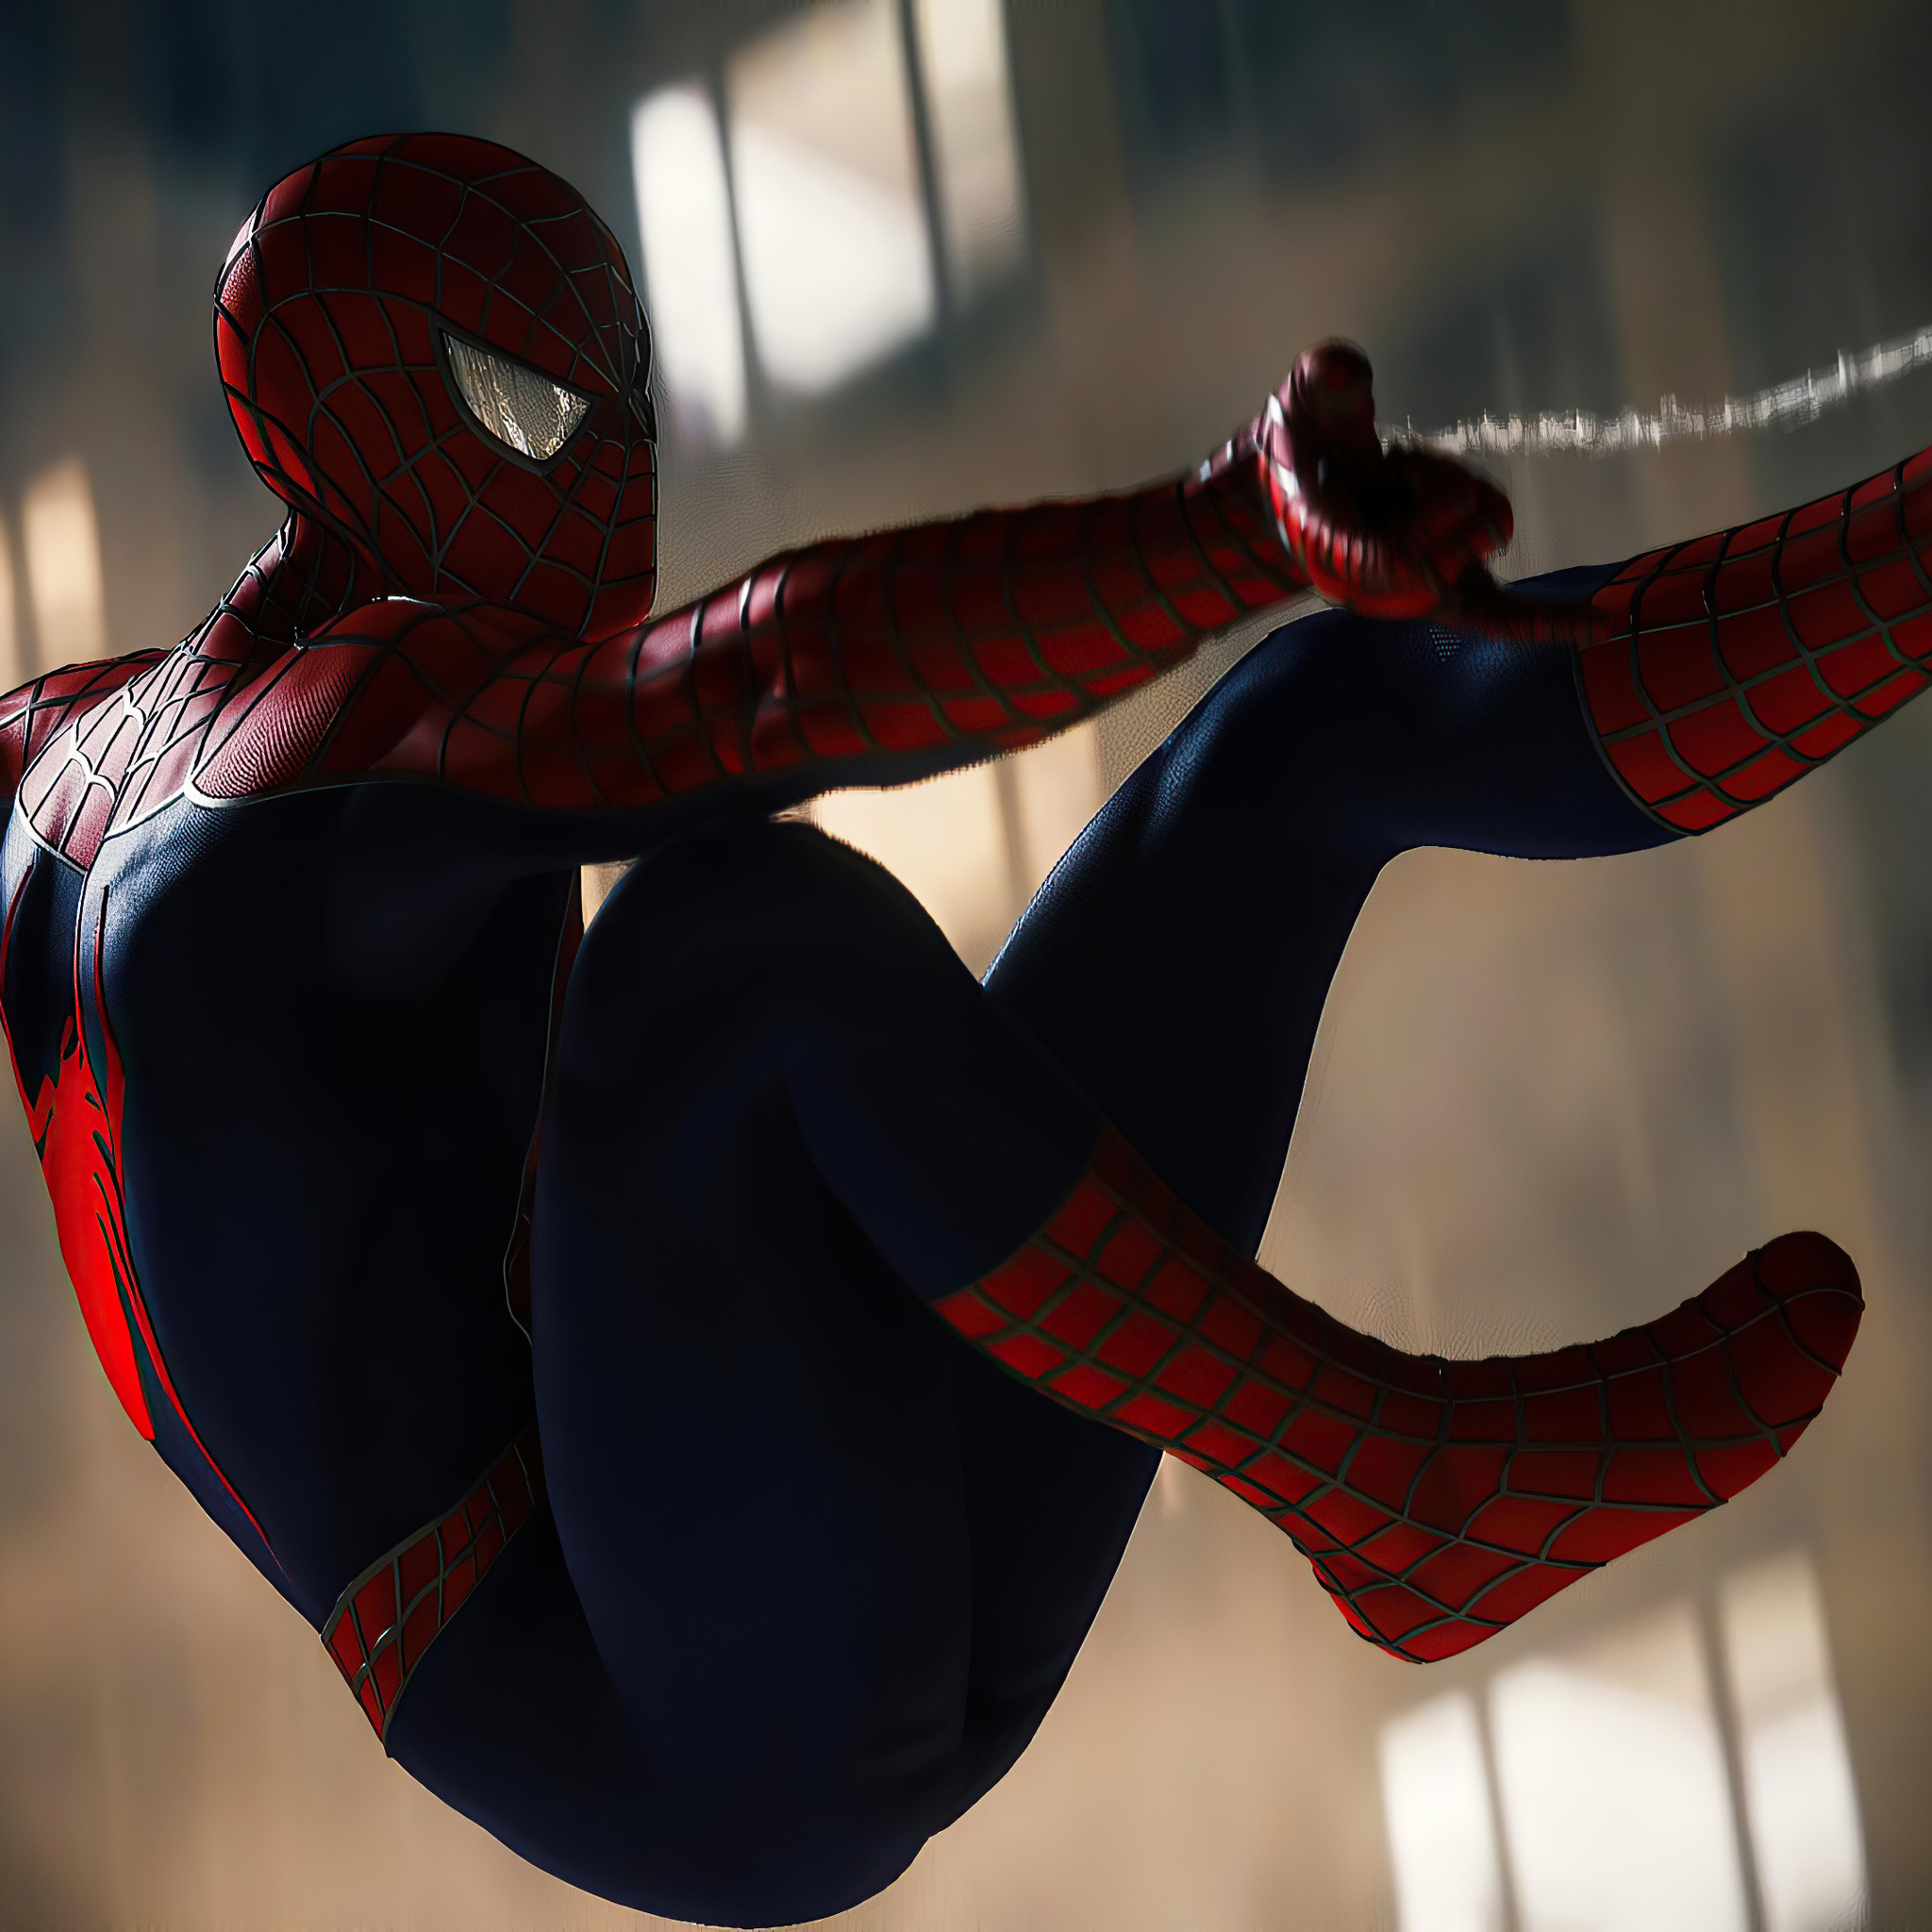 spider-man-ps4-game-2020-yt.jpg